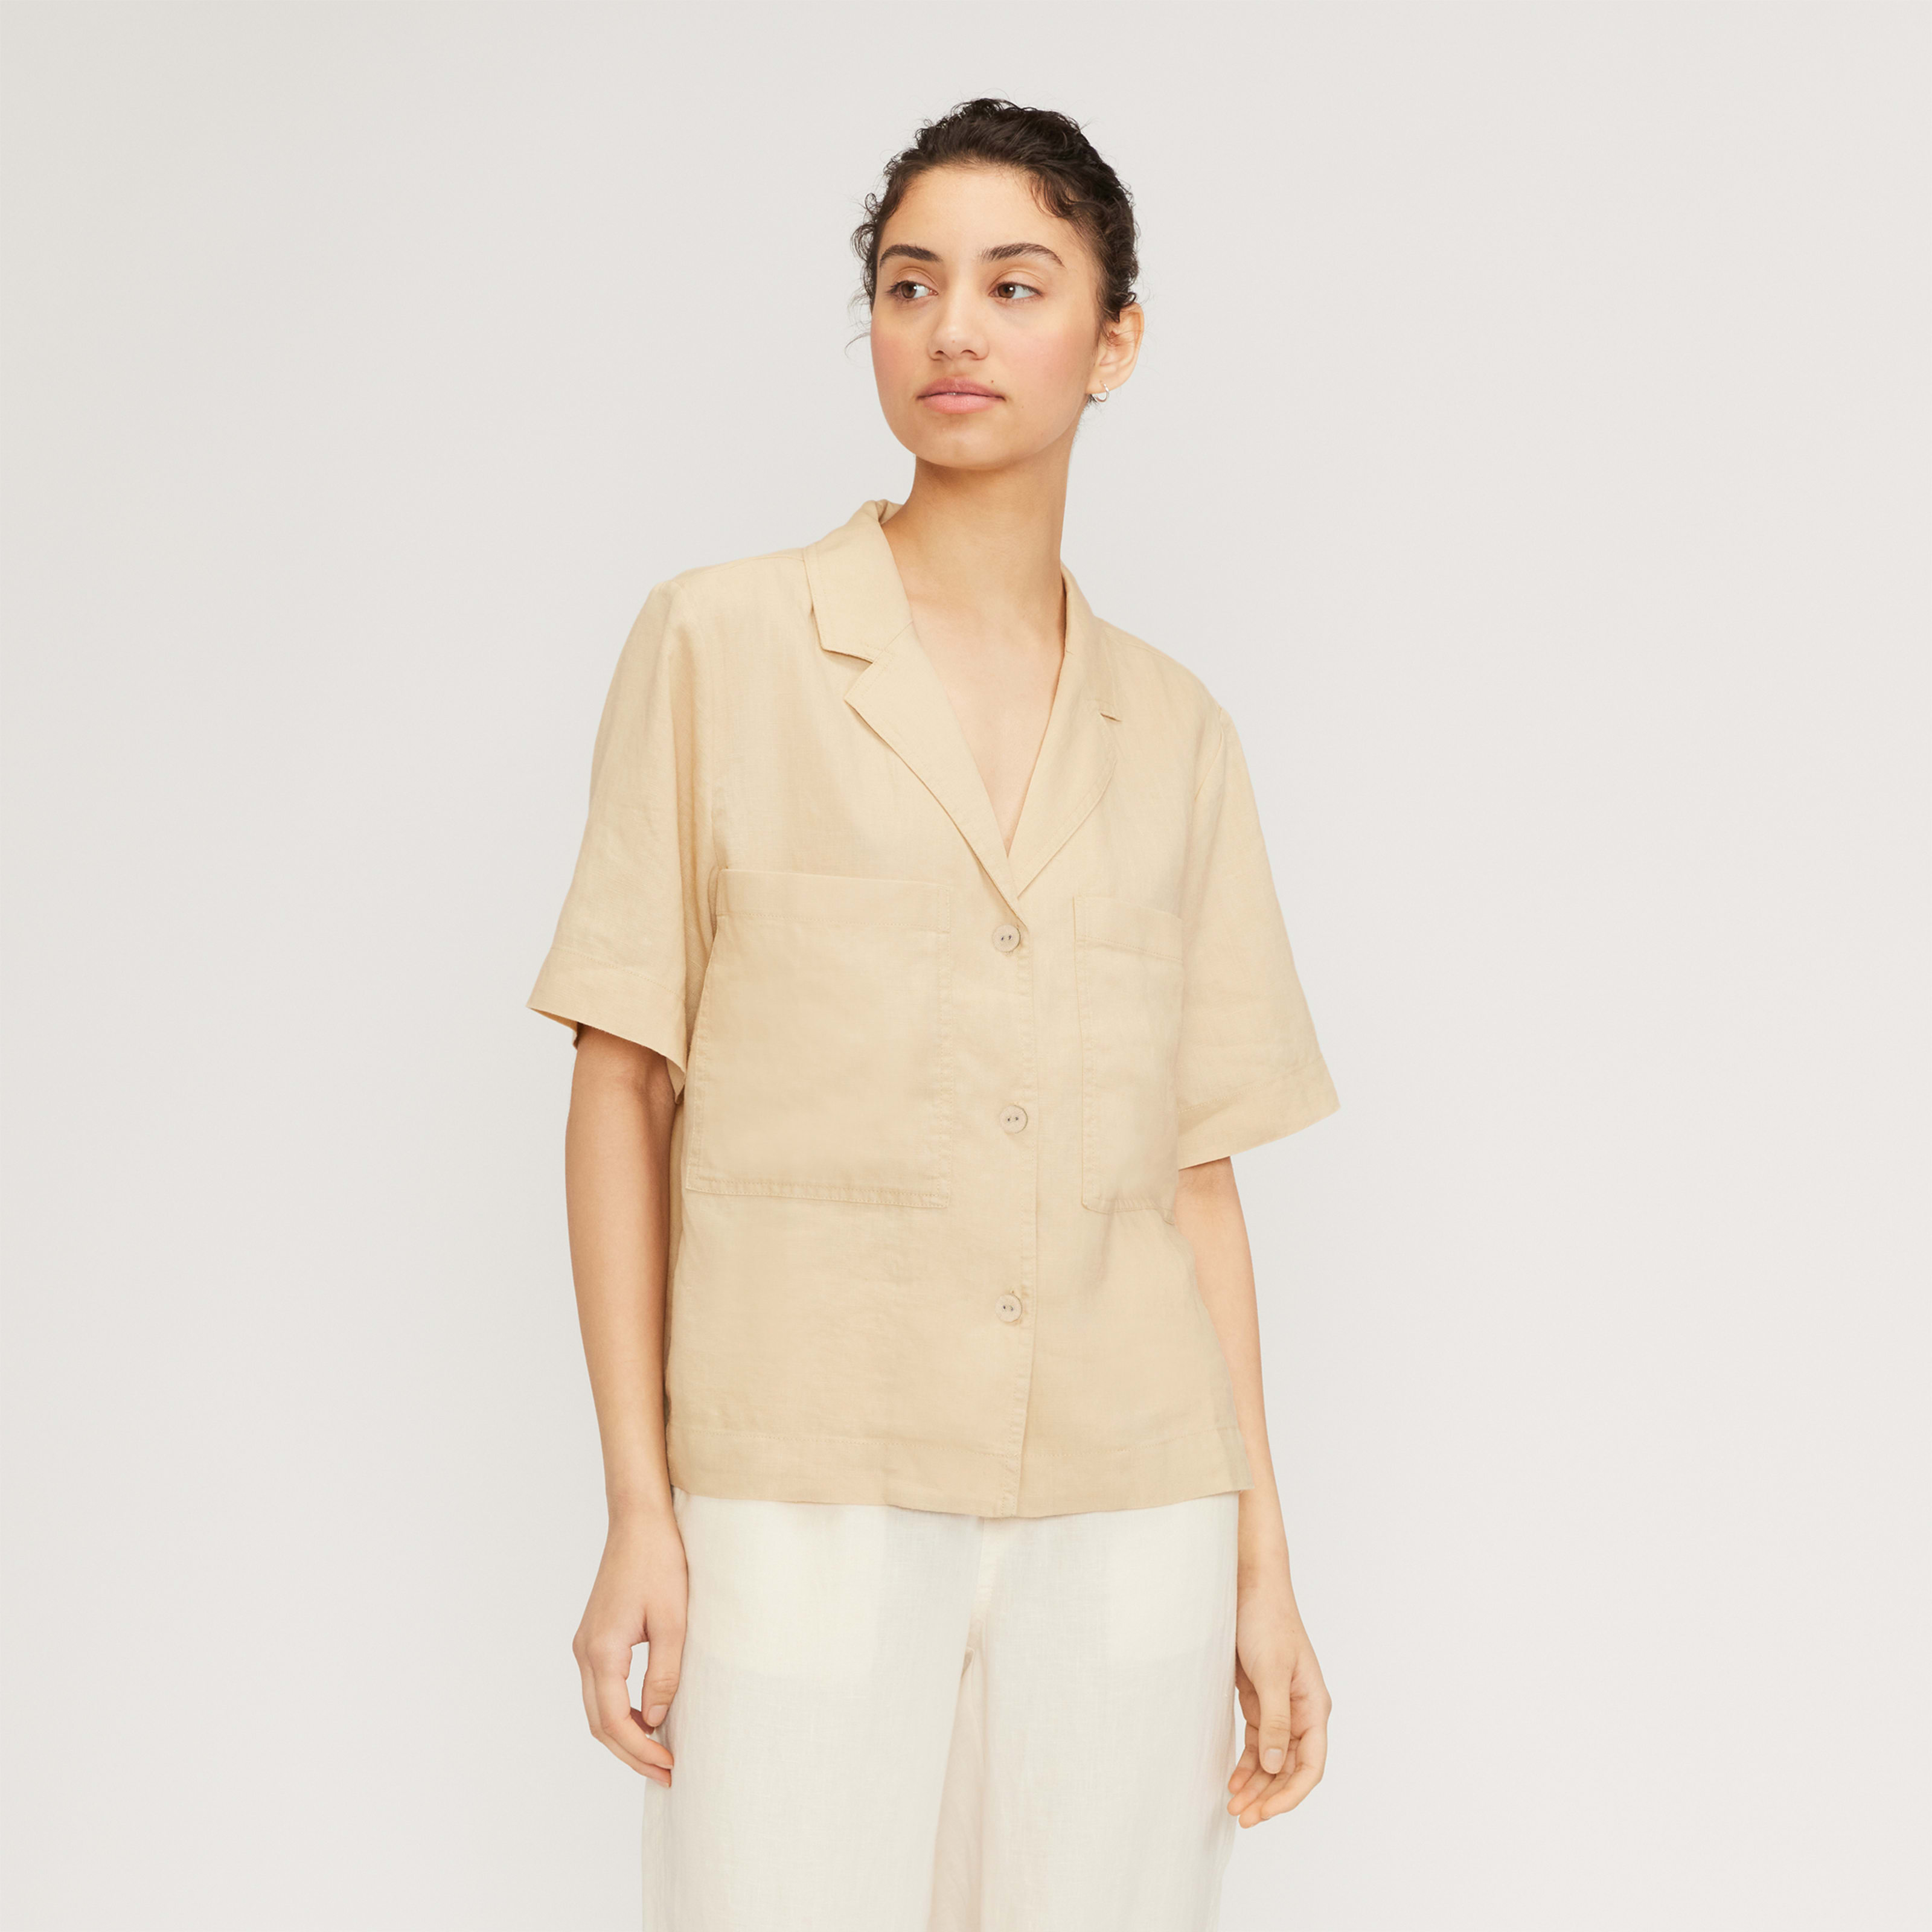 women's linen workwear shirt by everlane in warm khaki, size m